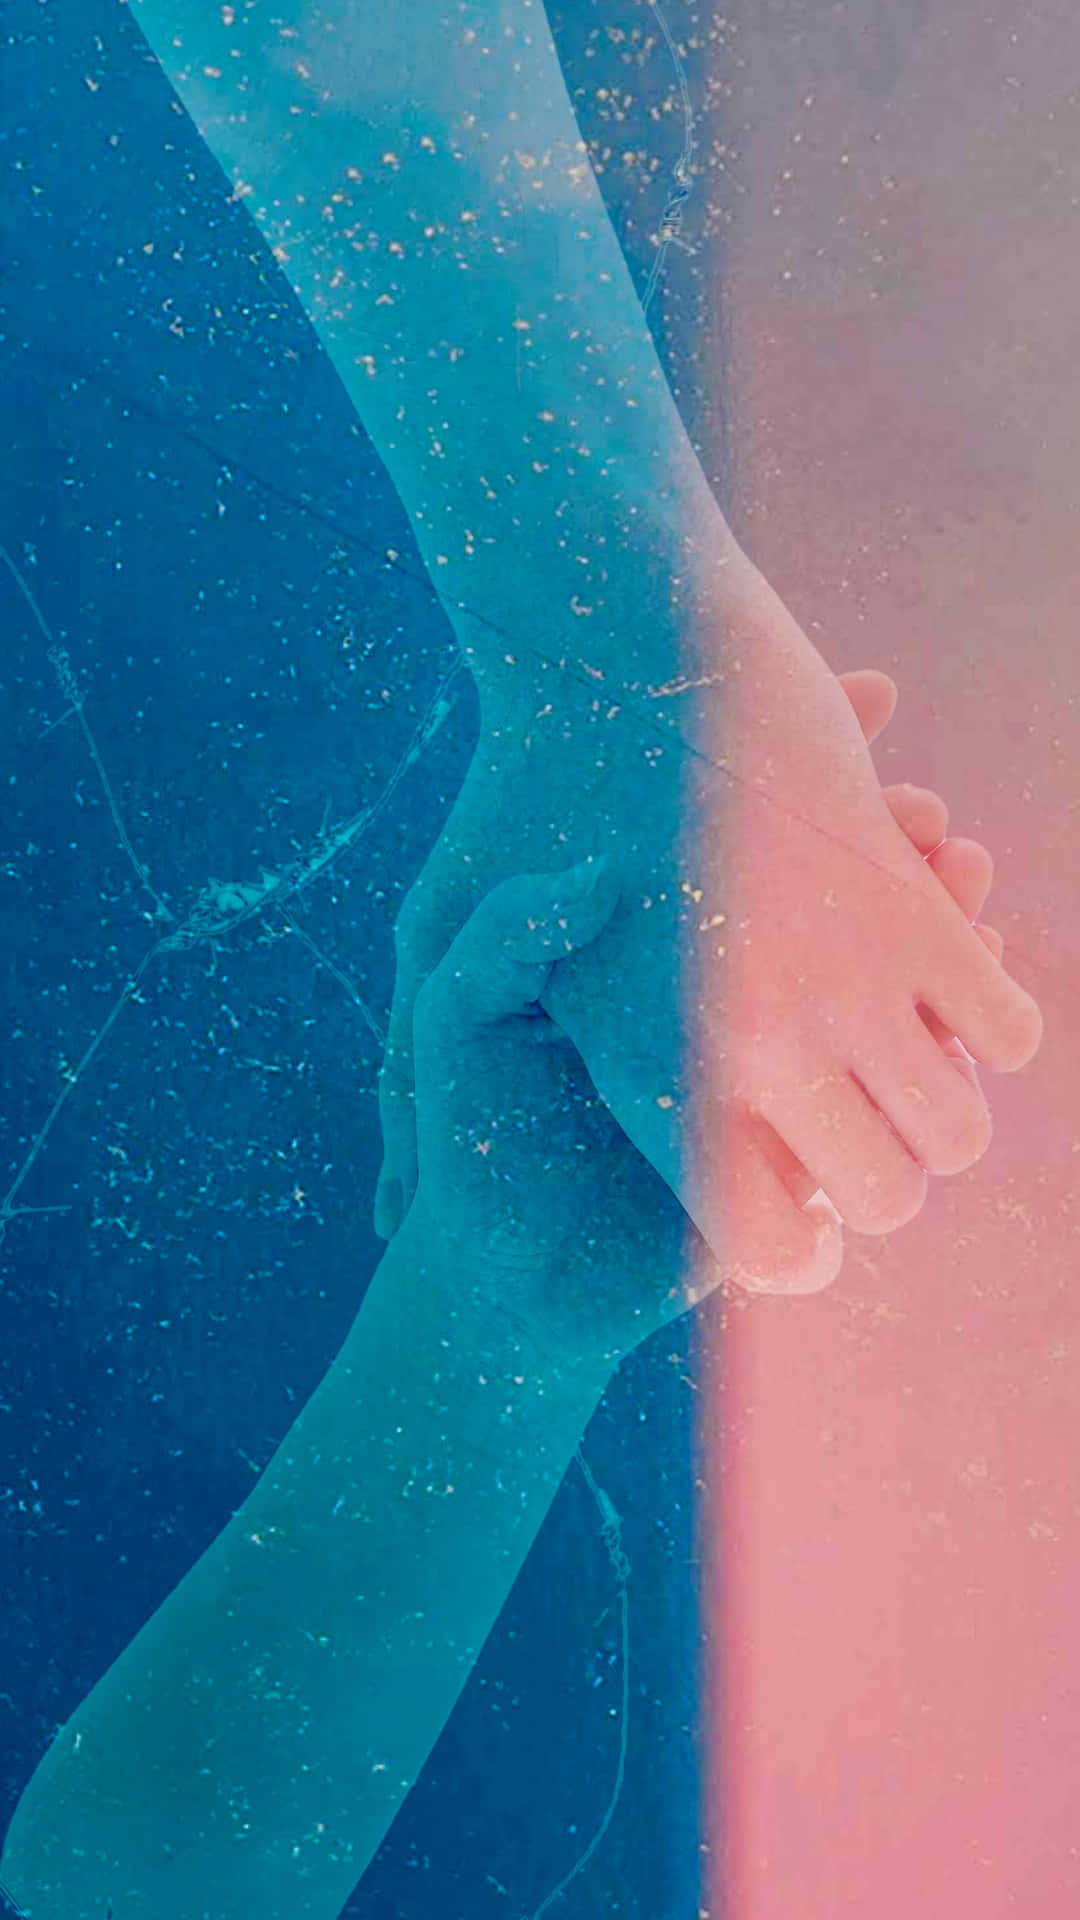 Blue And Pink Textured Handshake Wallpaper